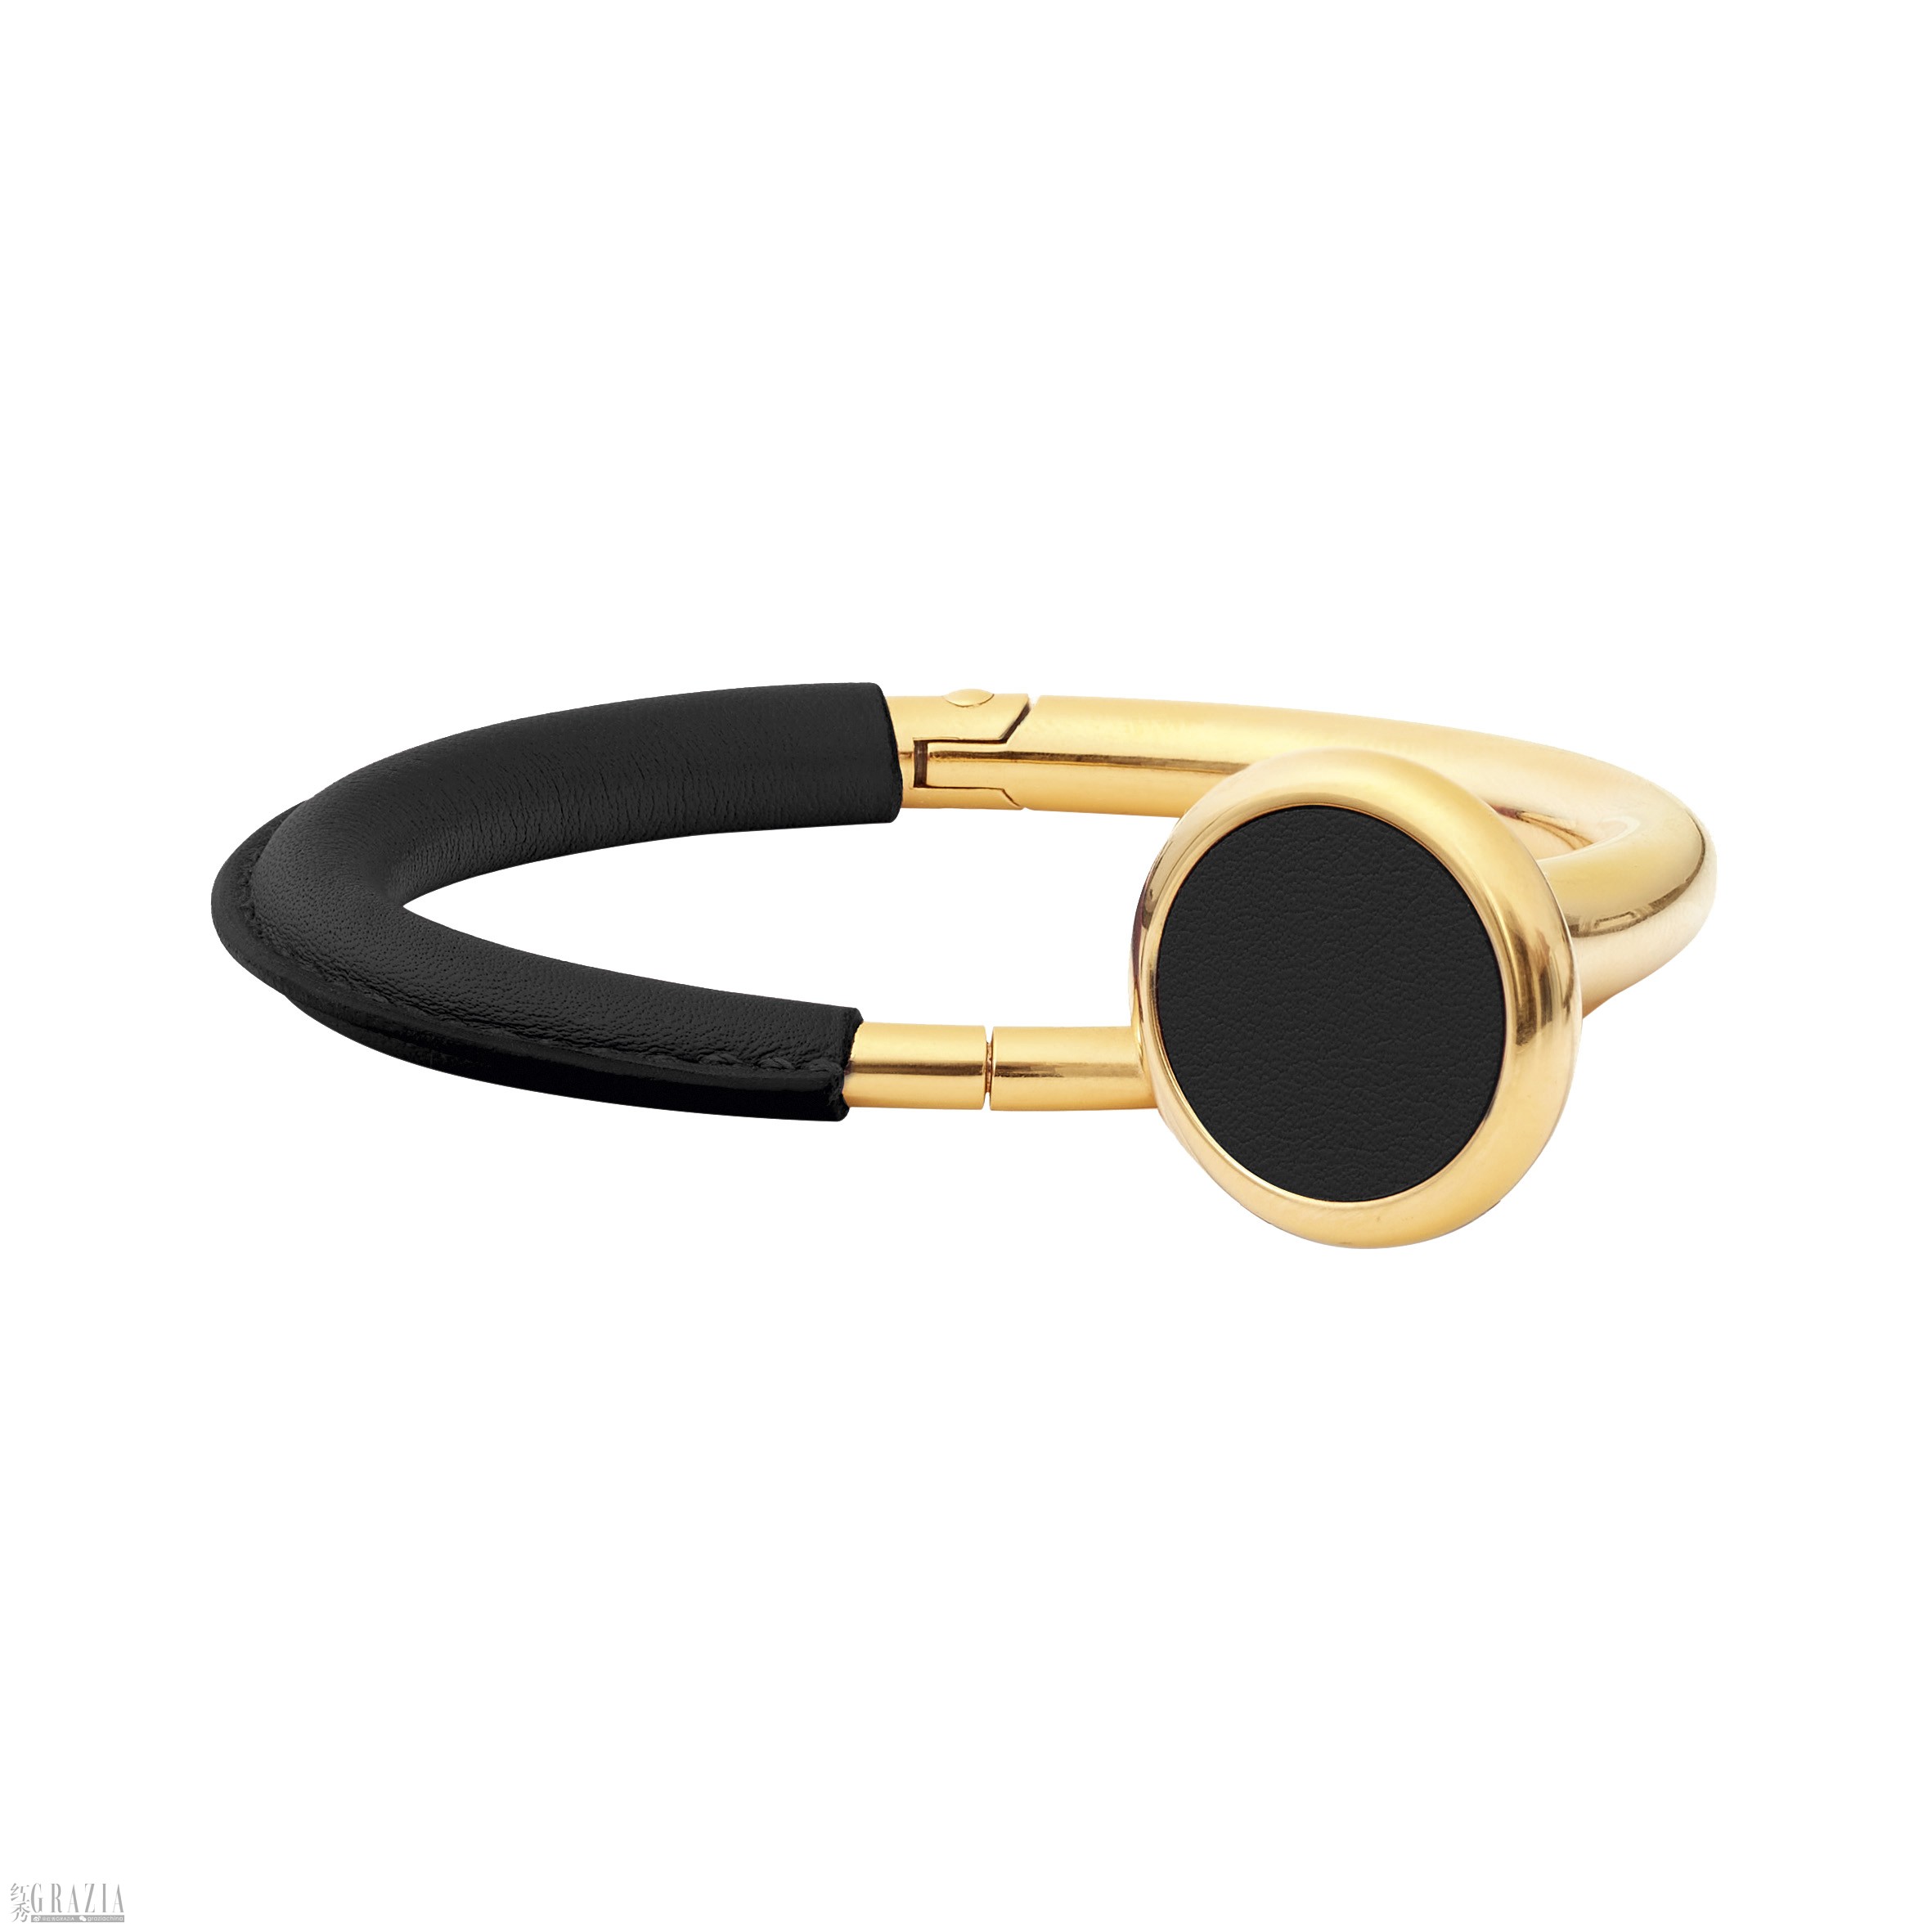 Bracelet in Swift calfskin and golden metal AW23 Objets Hermes © Studio des Fleurs.jpg